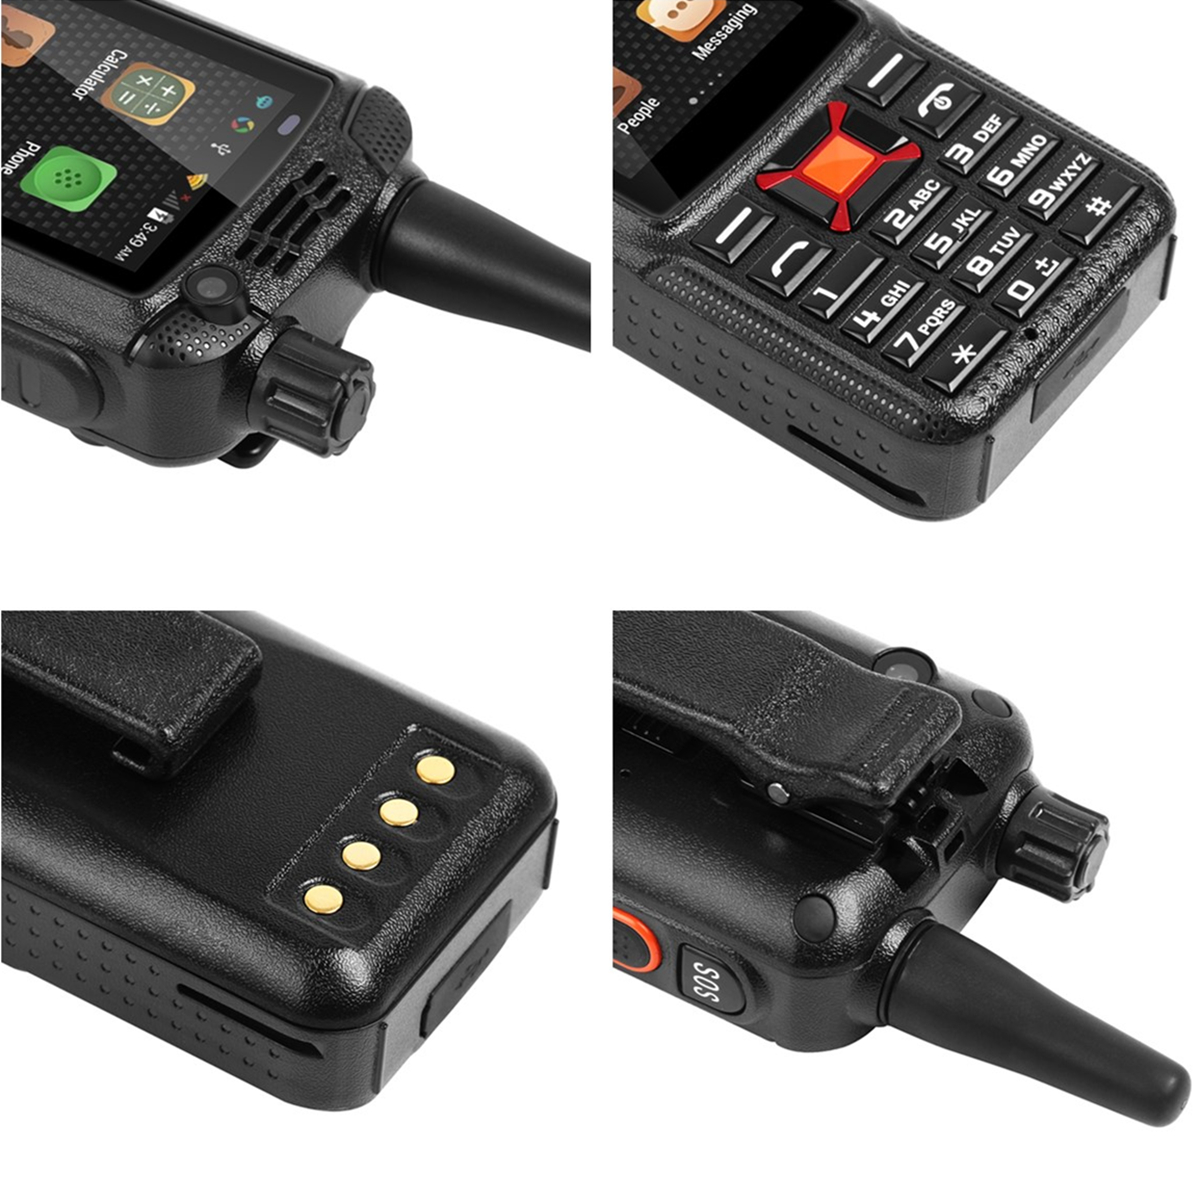 3G-Wifi-Touch-Screen-Walkie-Talkie-USB-BT-Smartphone-GPS-Double-Cam-Zello-Rechargeable-1401651